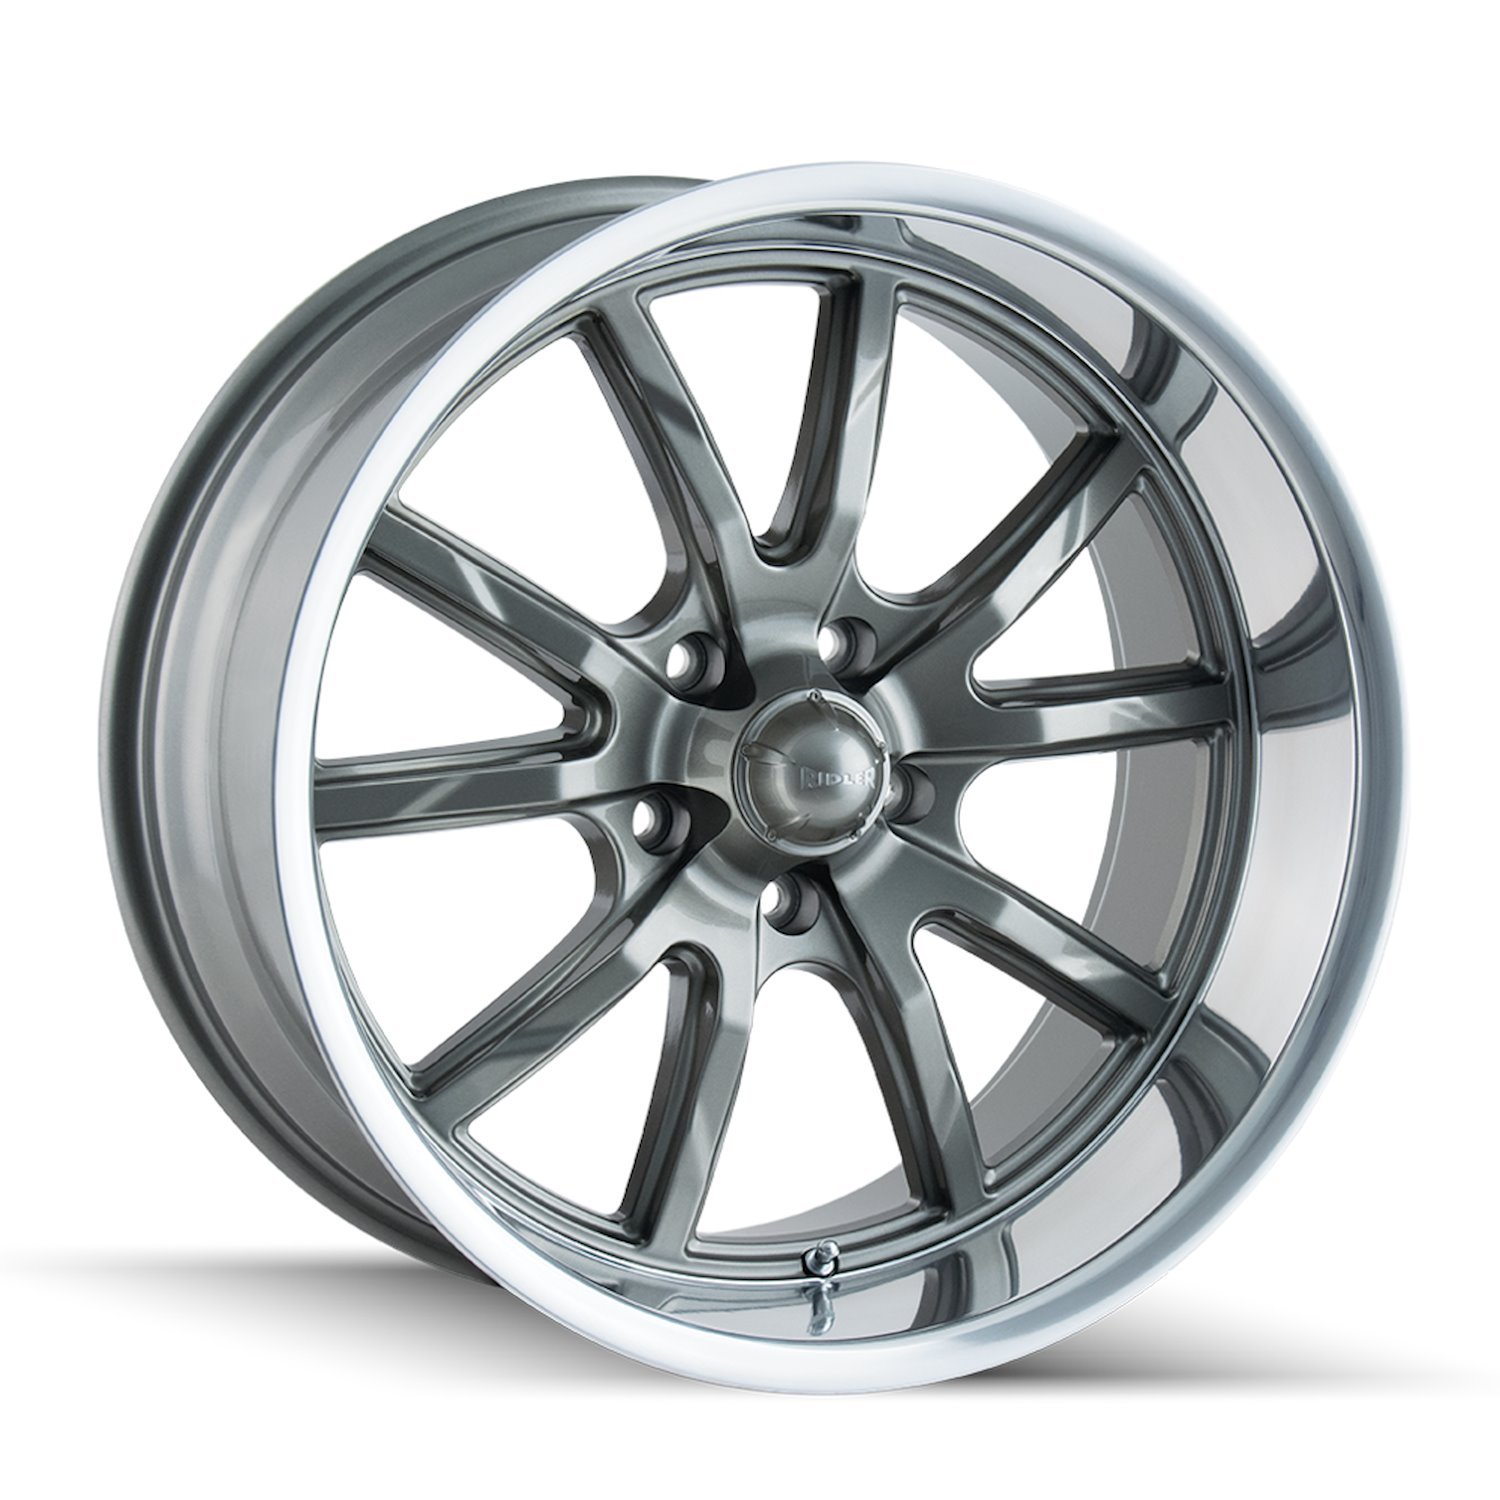 650-22965G18 650-Series Wheel [Size: 22" x 9.50"] Gloss Grey Polished Finish